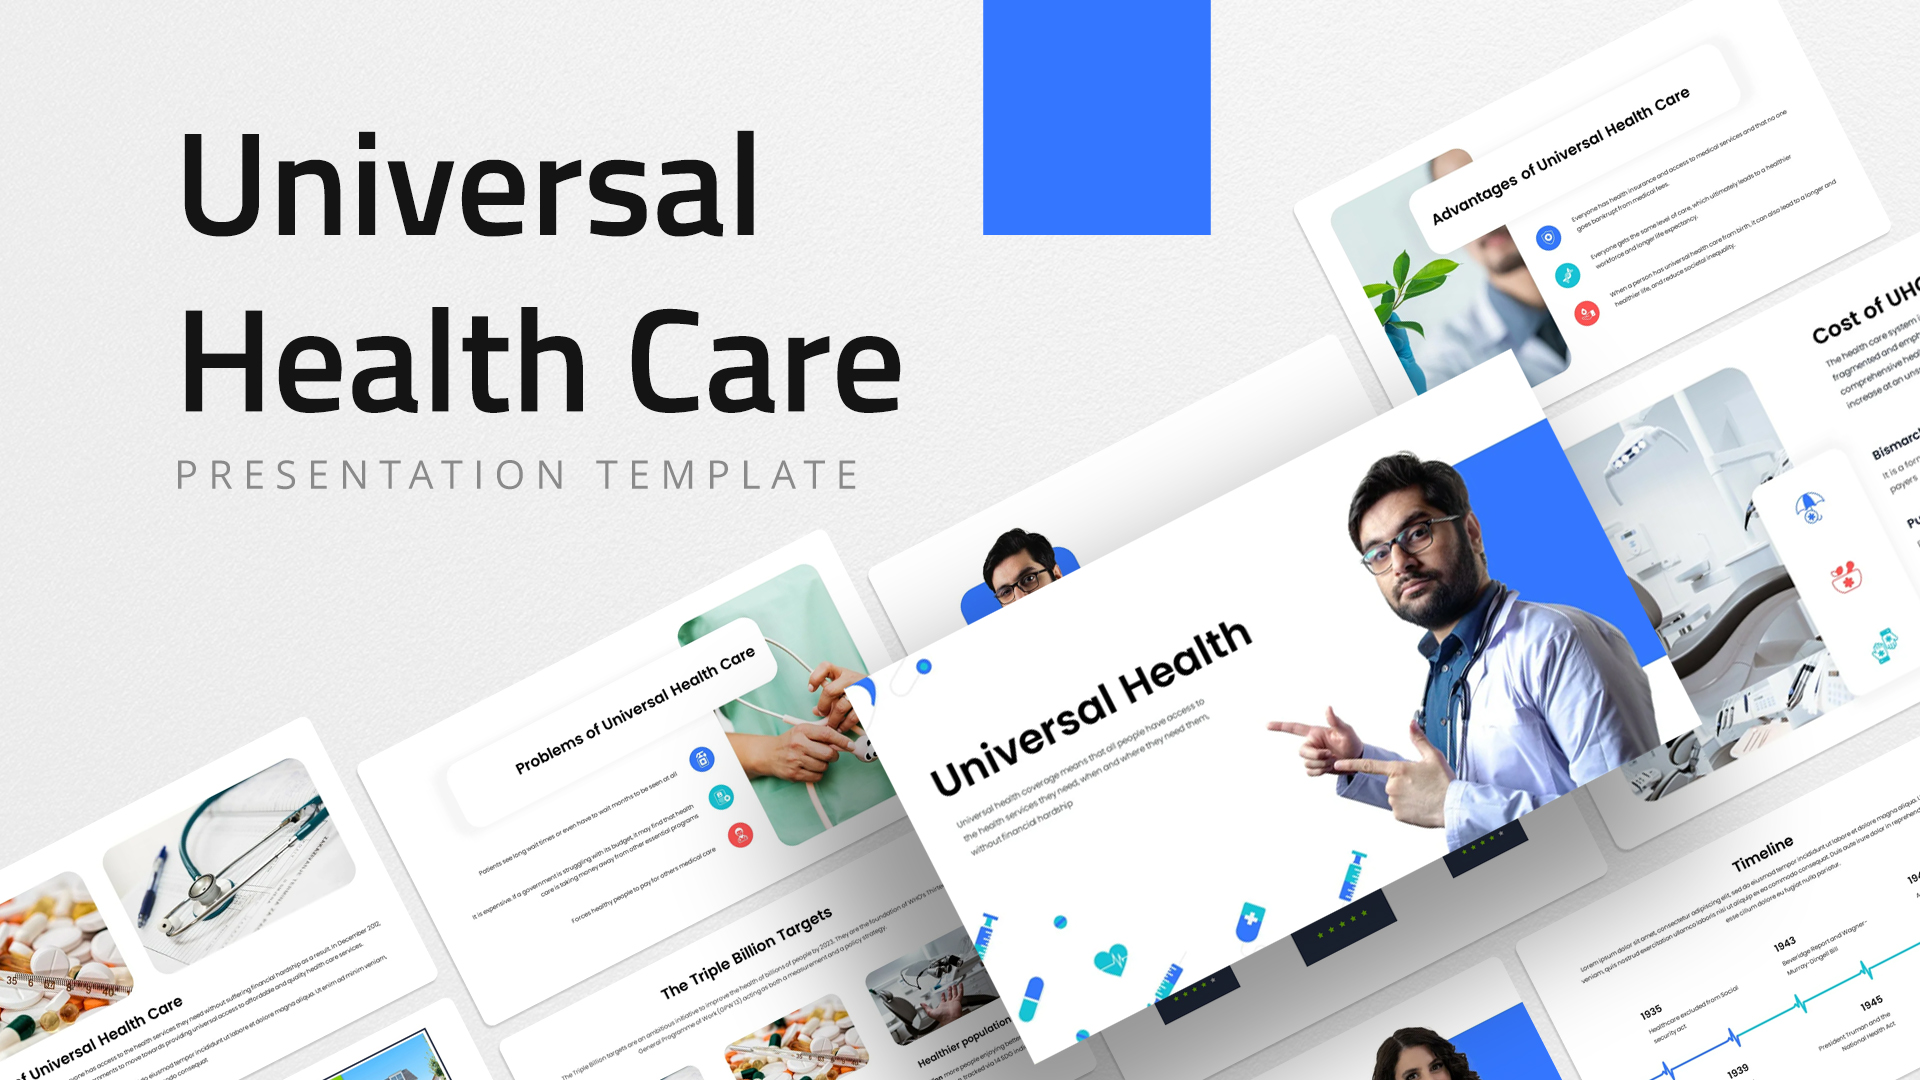 Universal Health Care Presentation Cover Image